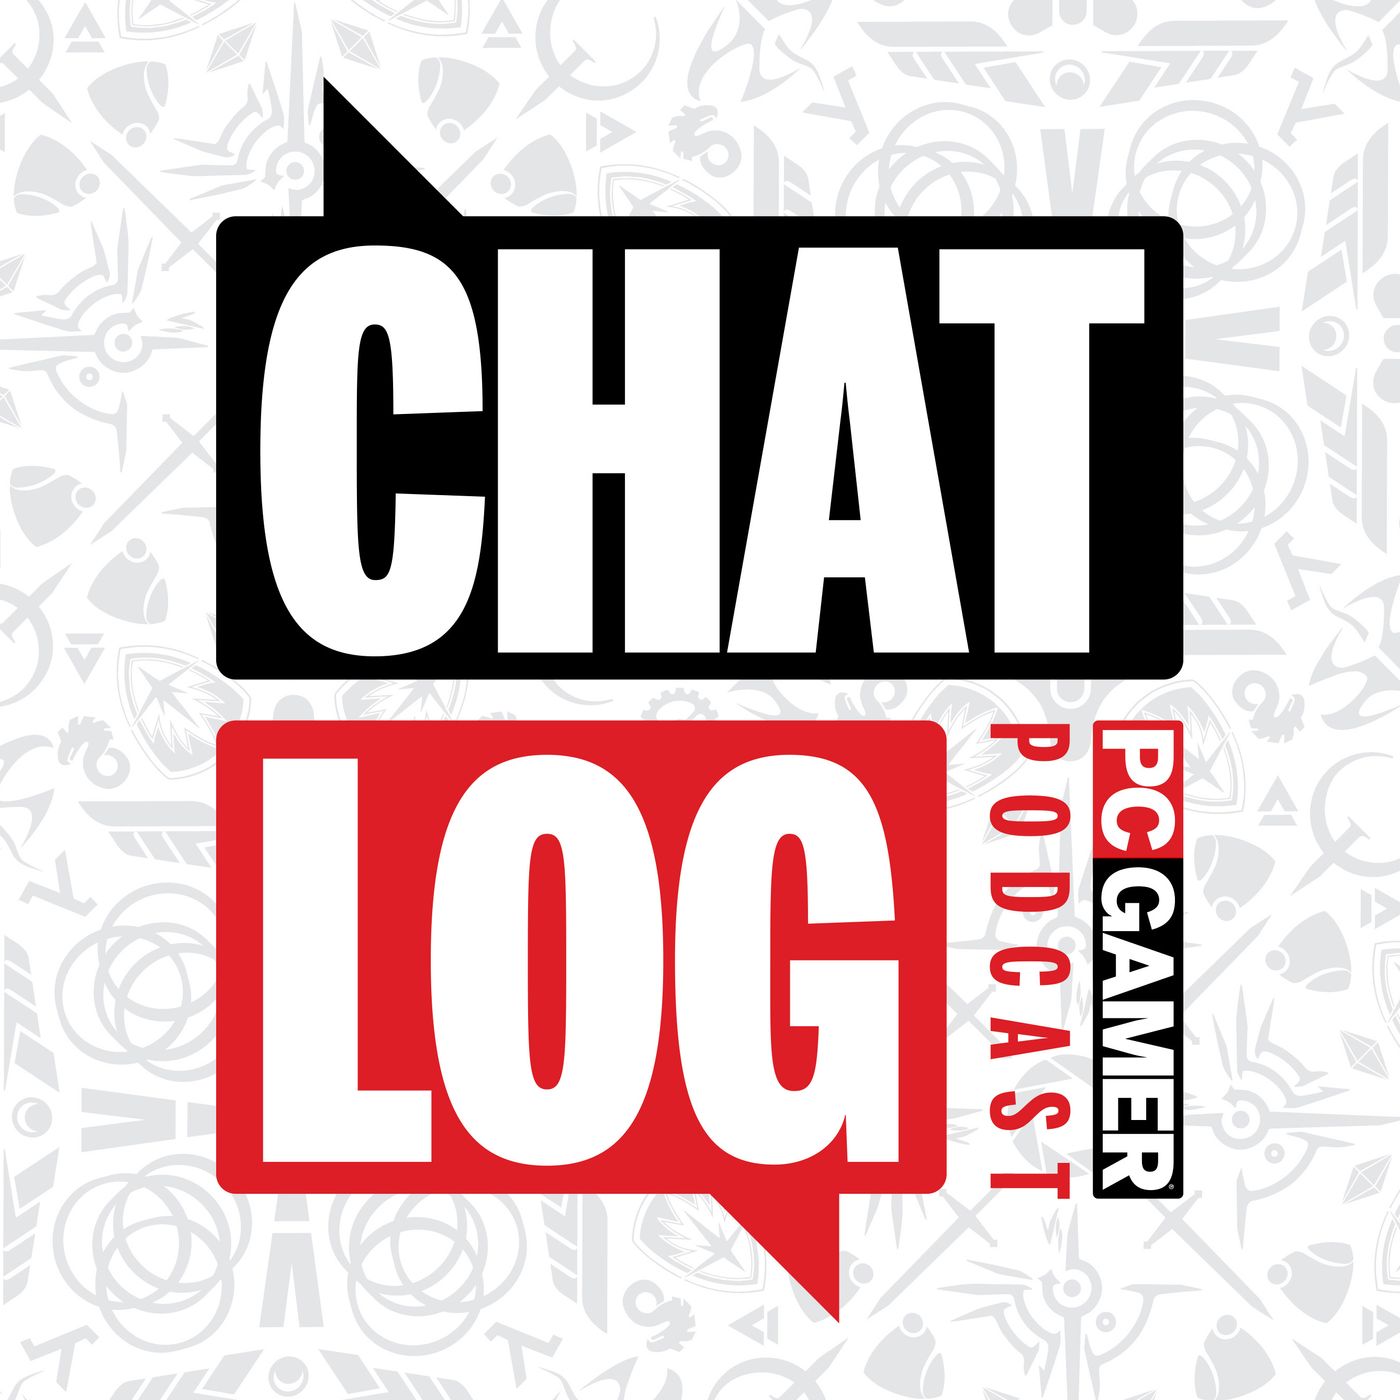 Trailer: Chat Log, PC Gamer’s new podcast